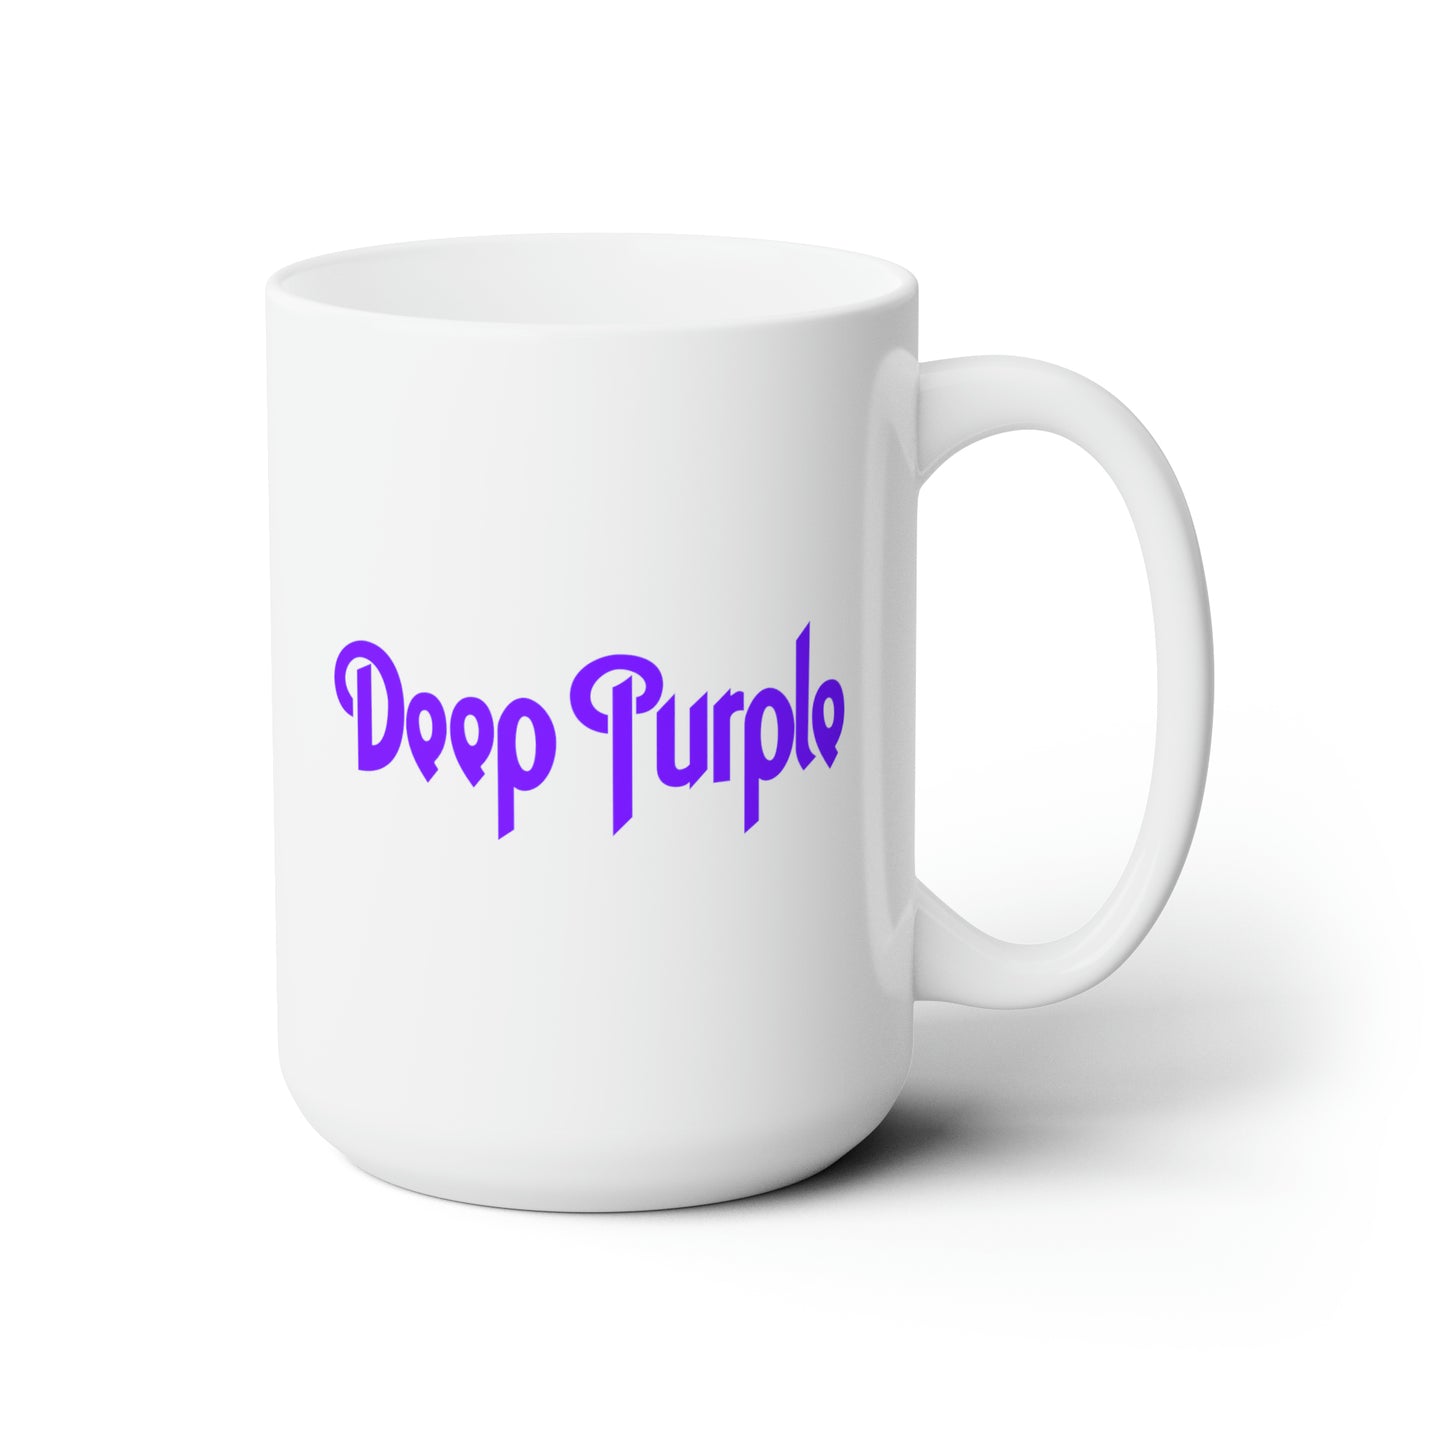 Deep Purple Coffee Mug - Double Sided White Ceramic 15oz by TheGlassyLass.com